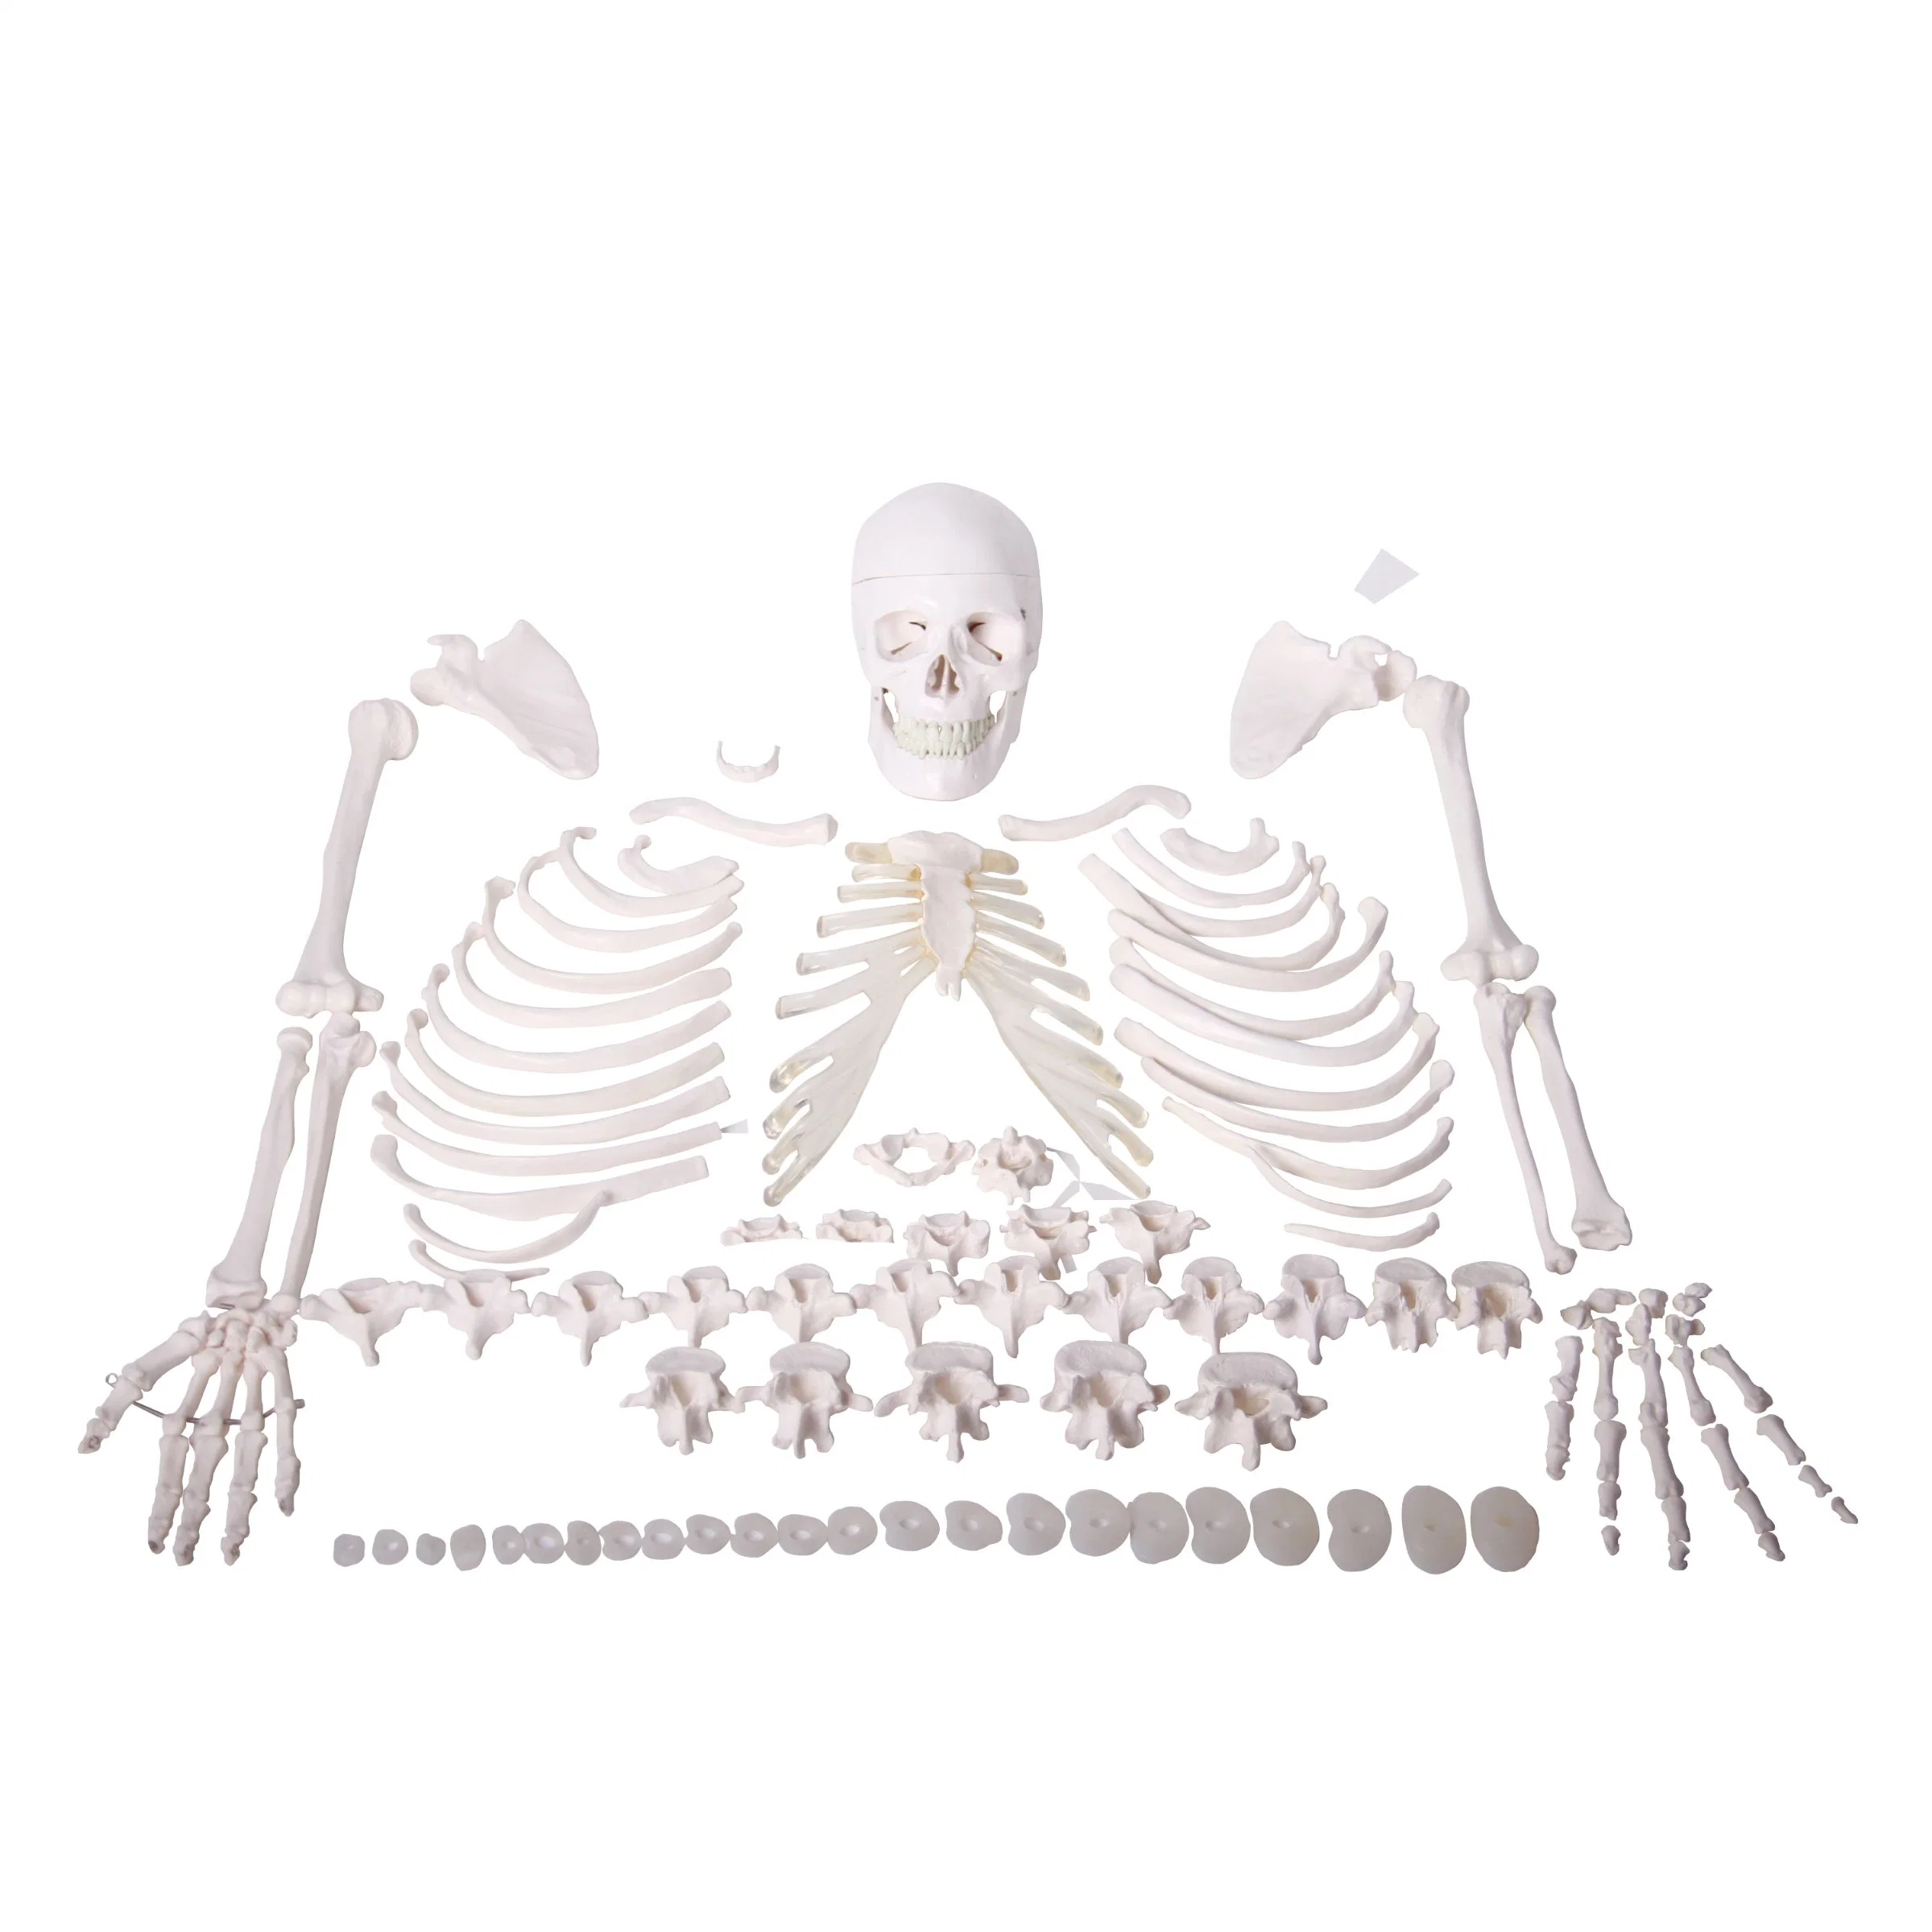 Super Economy Medical 3D Models 170cm Human Whole Body Bone Model Disarticulated Skull Skeleton